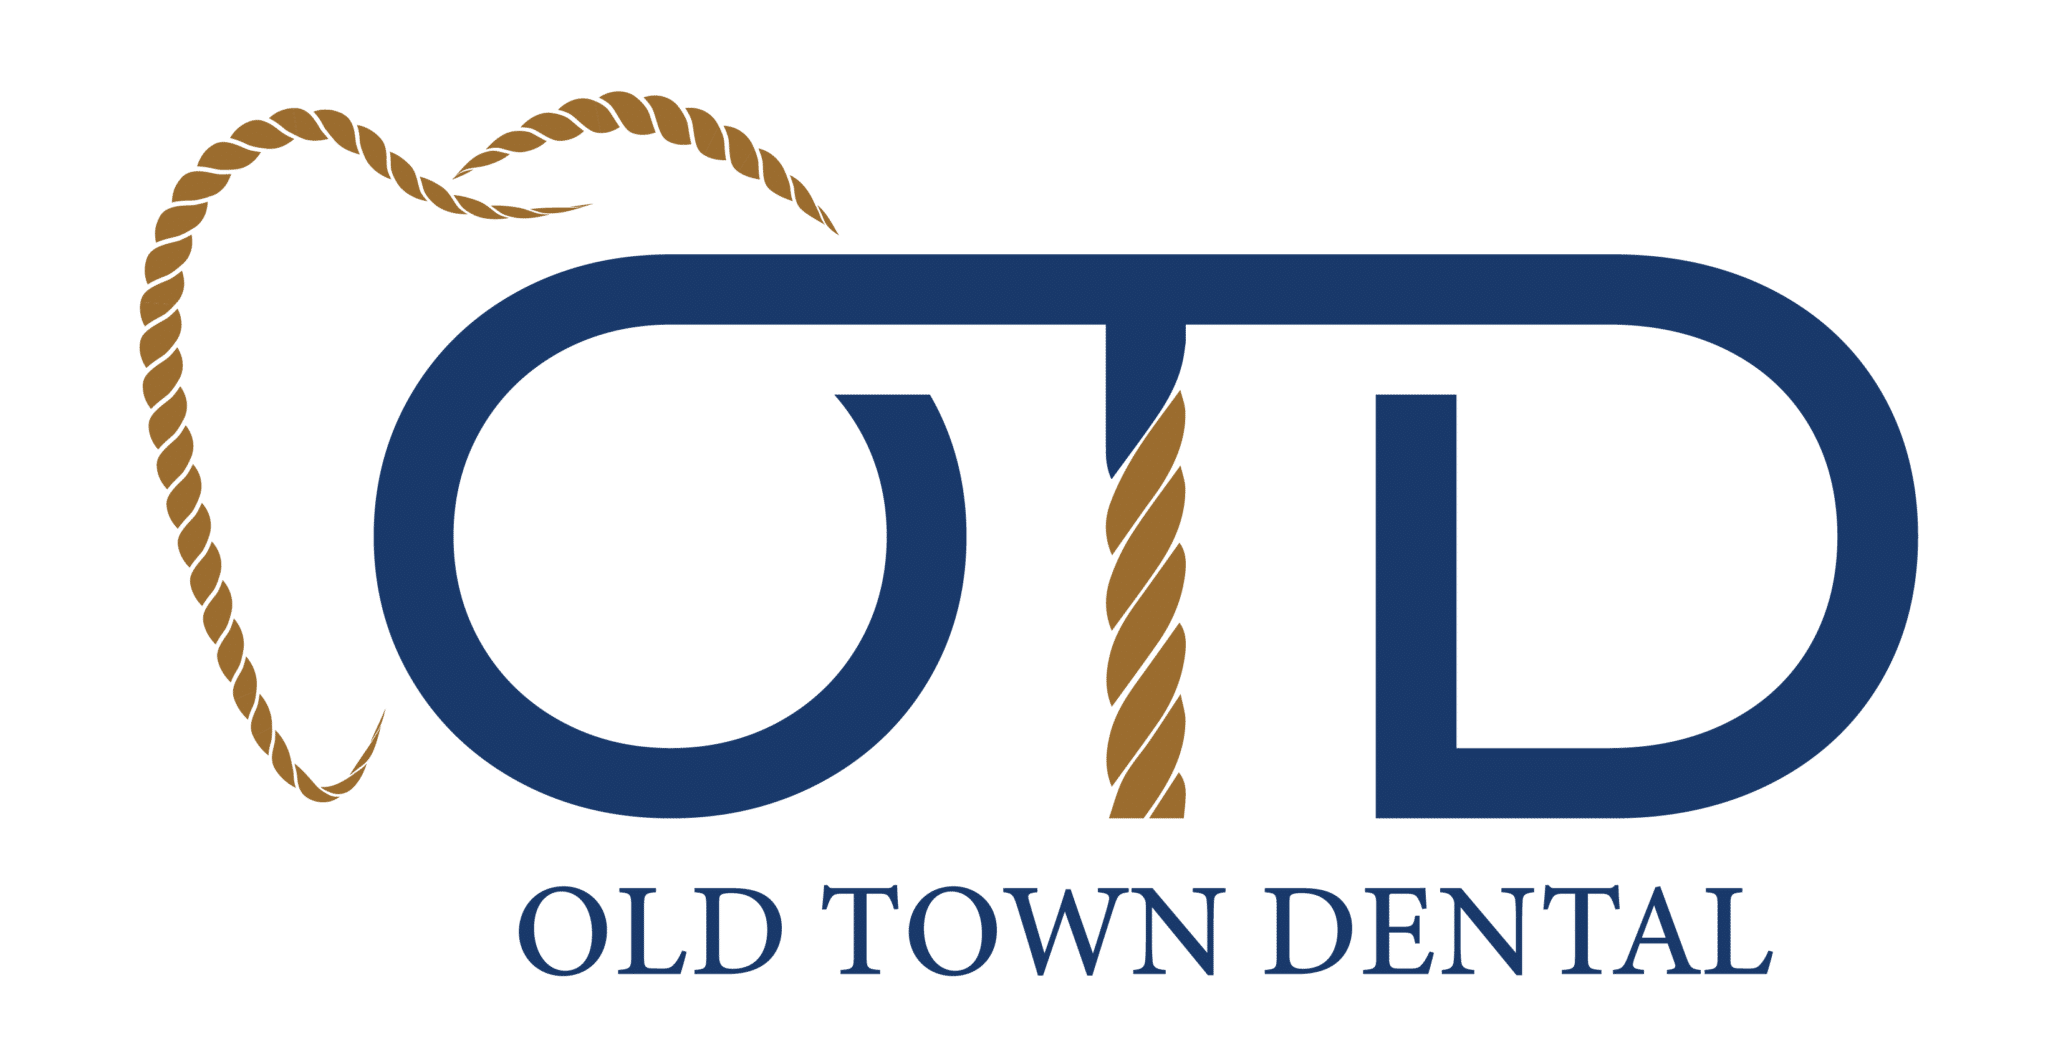 https://fkspca.org/wp-content/uploads/2022/03/Old-Town-Dental-1-02-1-2.png